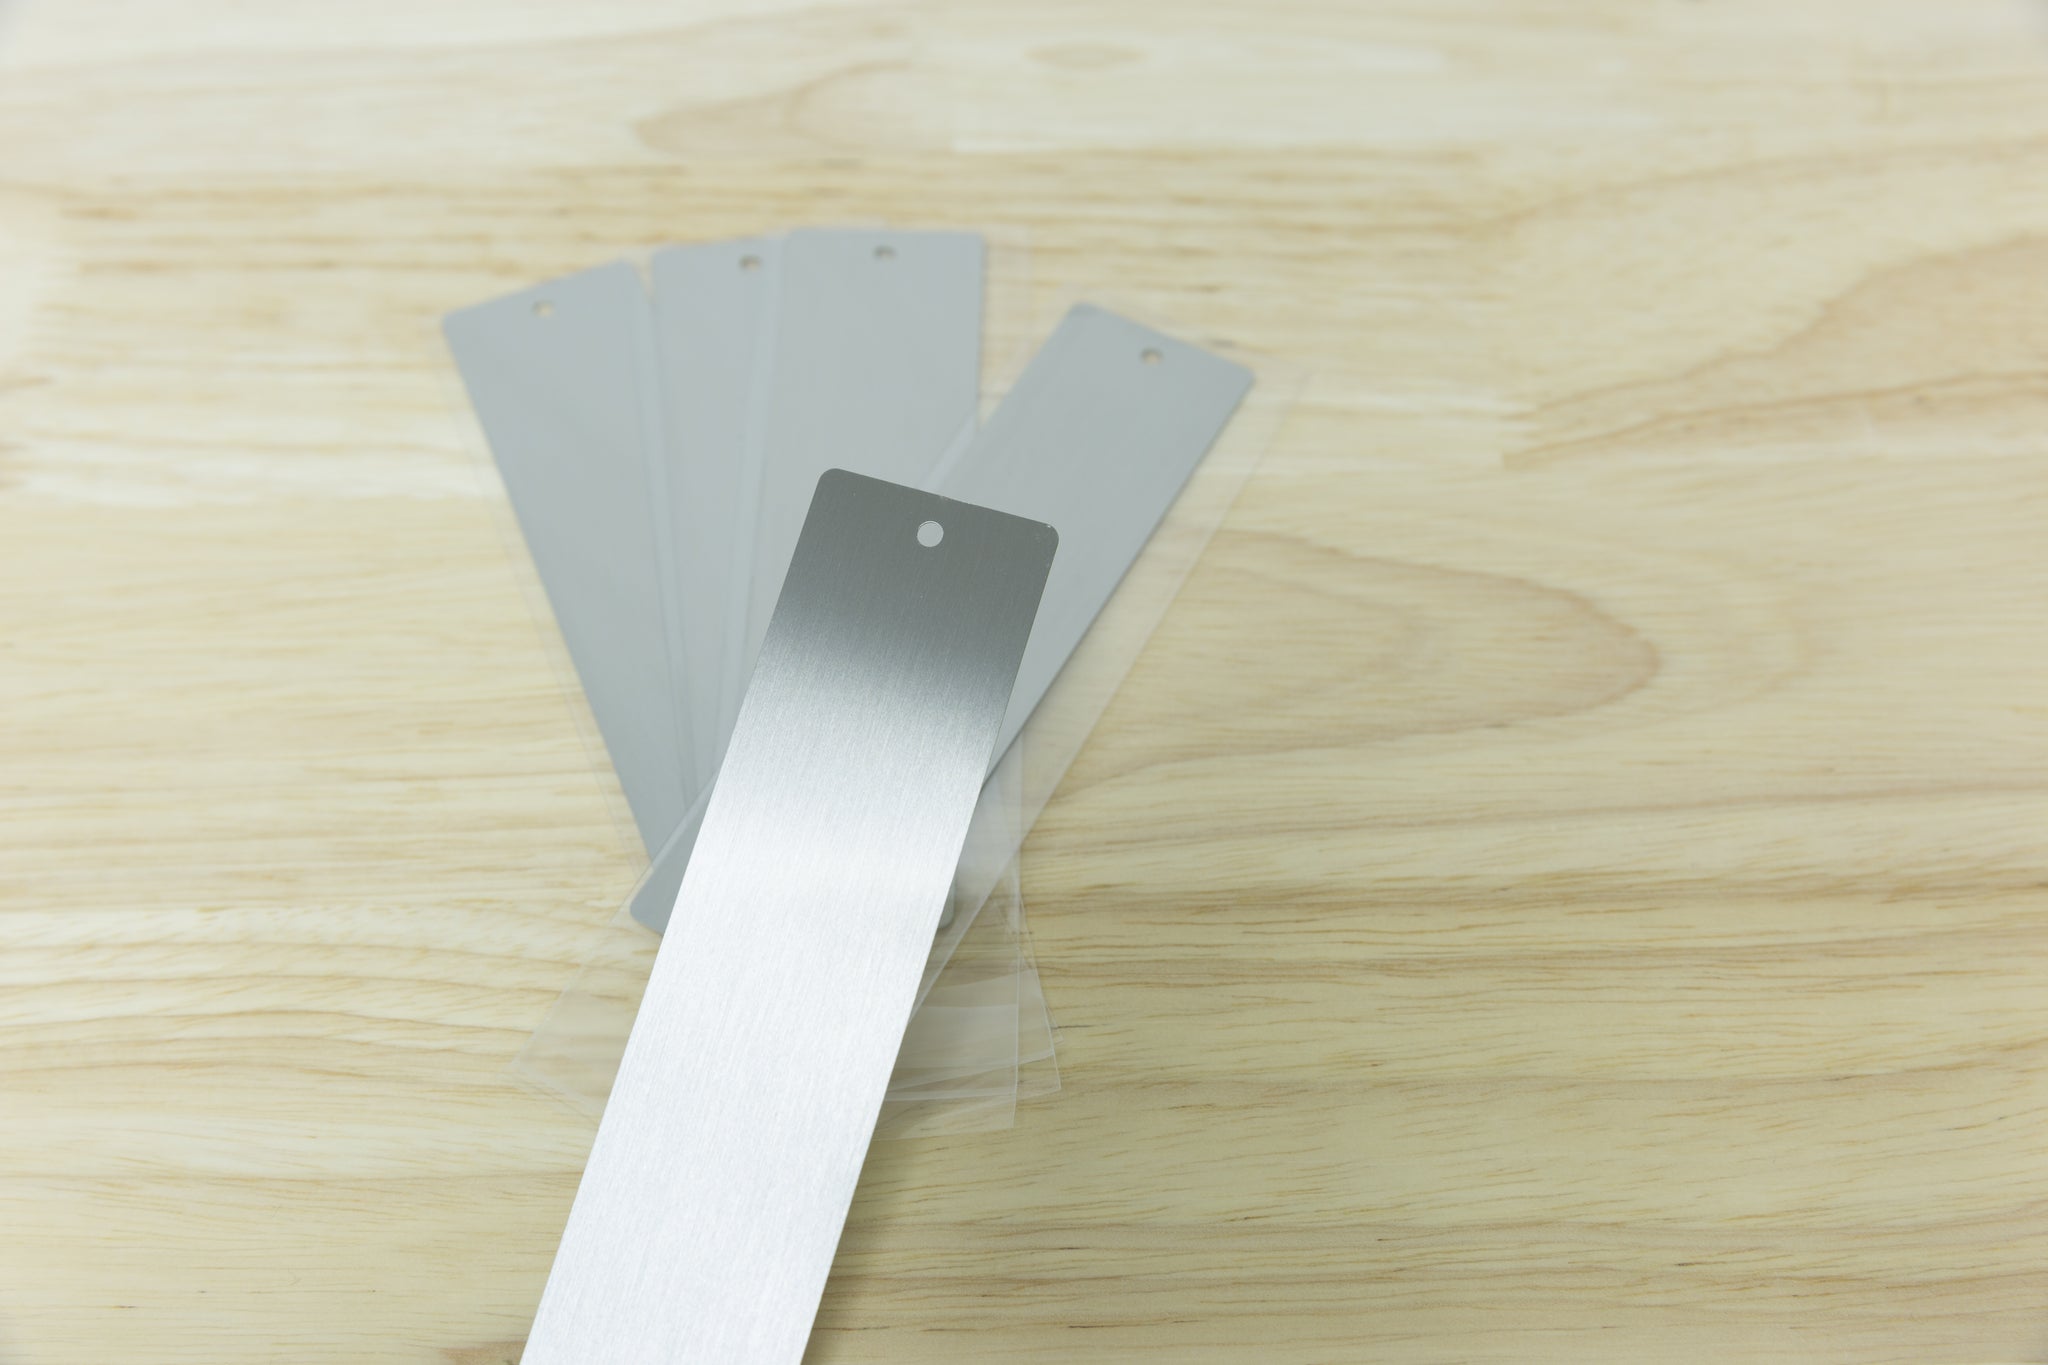 10pcs Wholesale Silver Bookmark Blanks - Metal Bookmarks - Blank